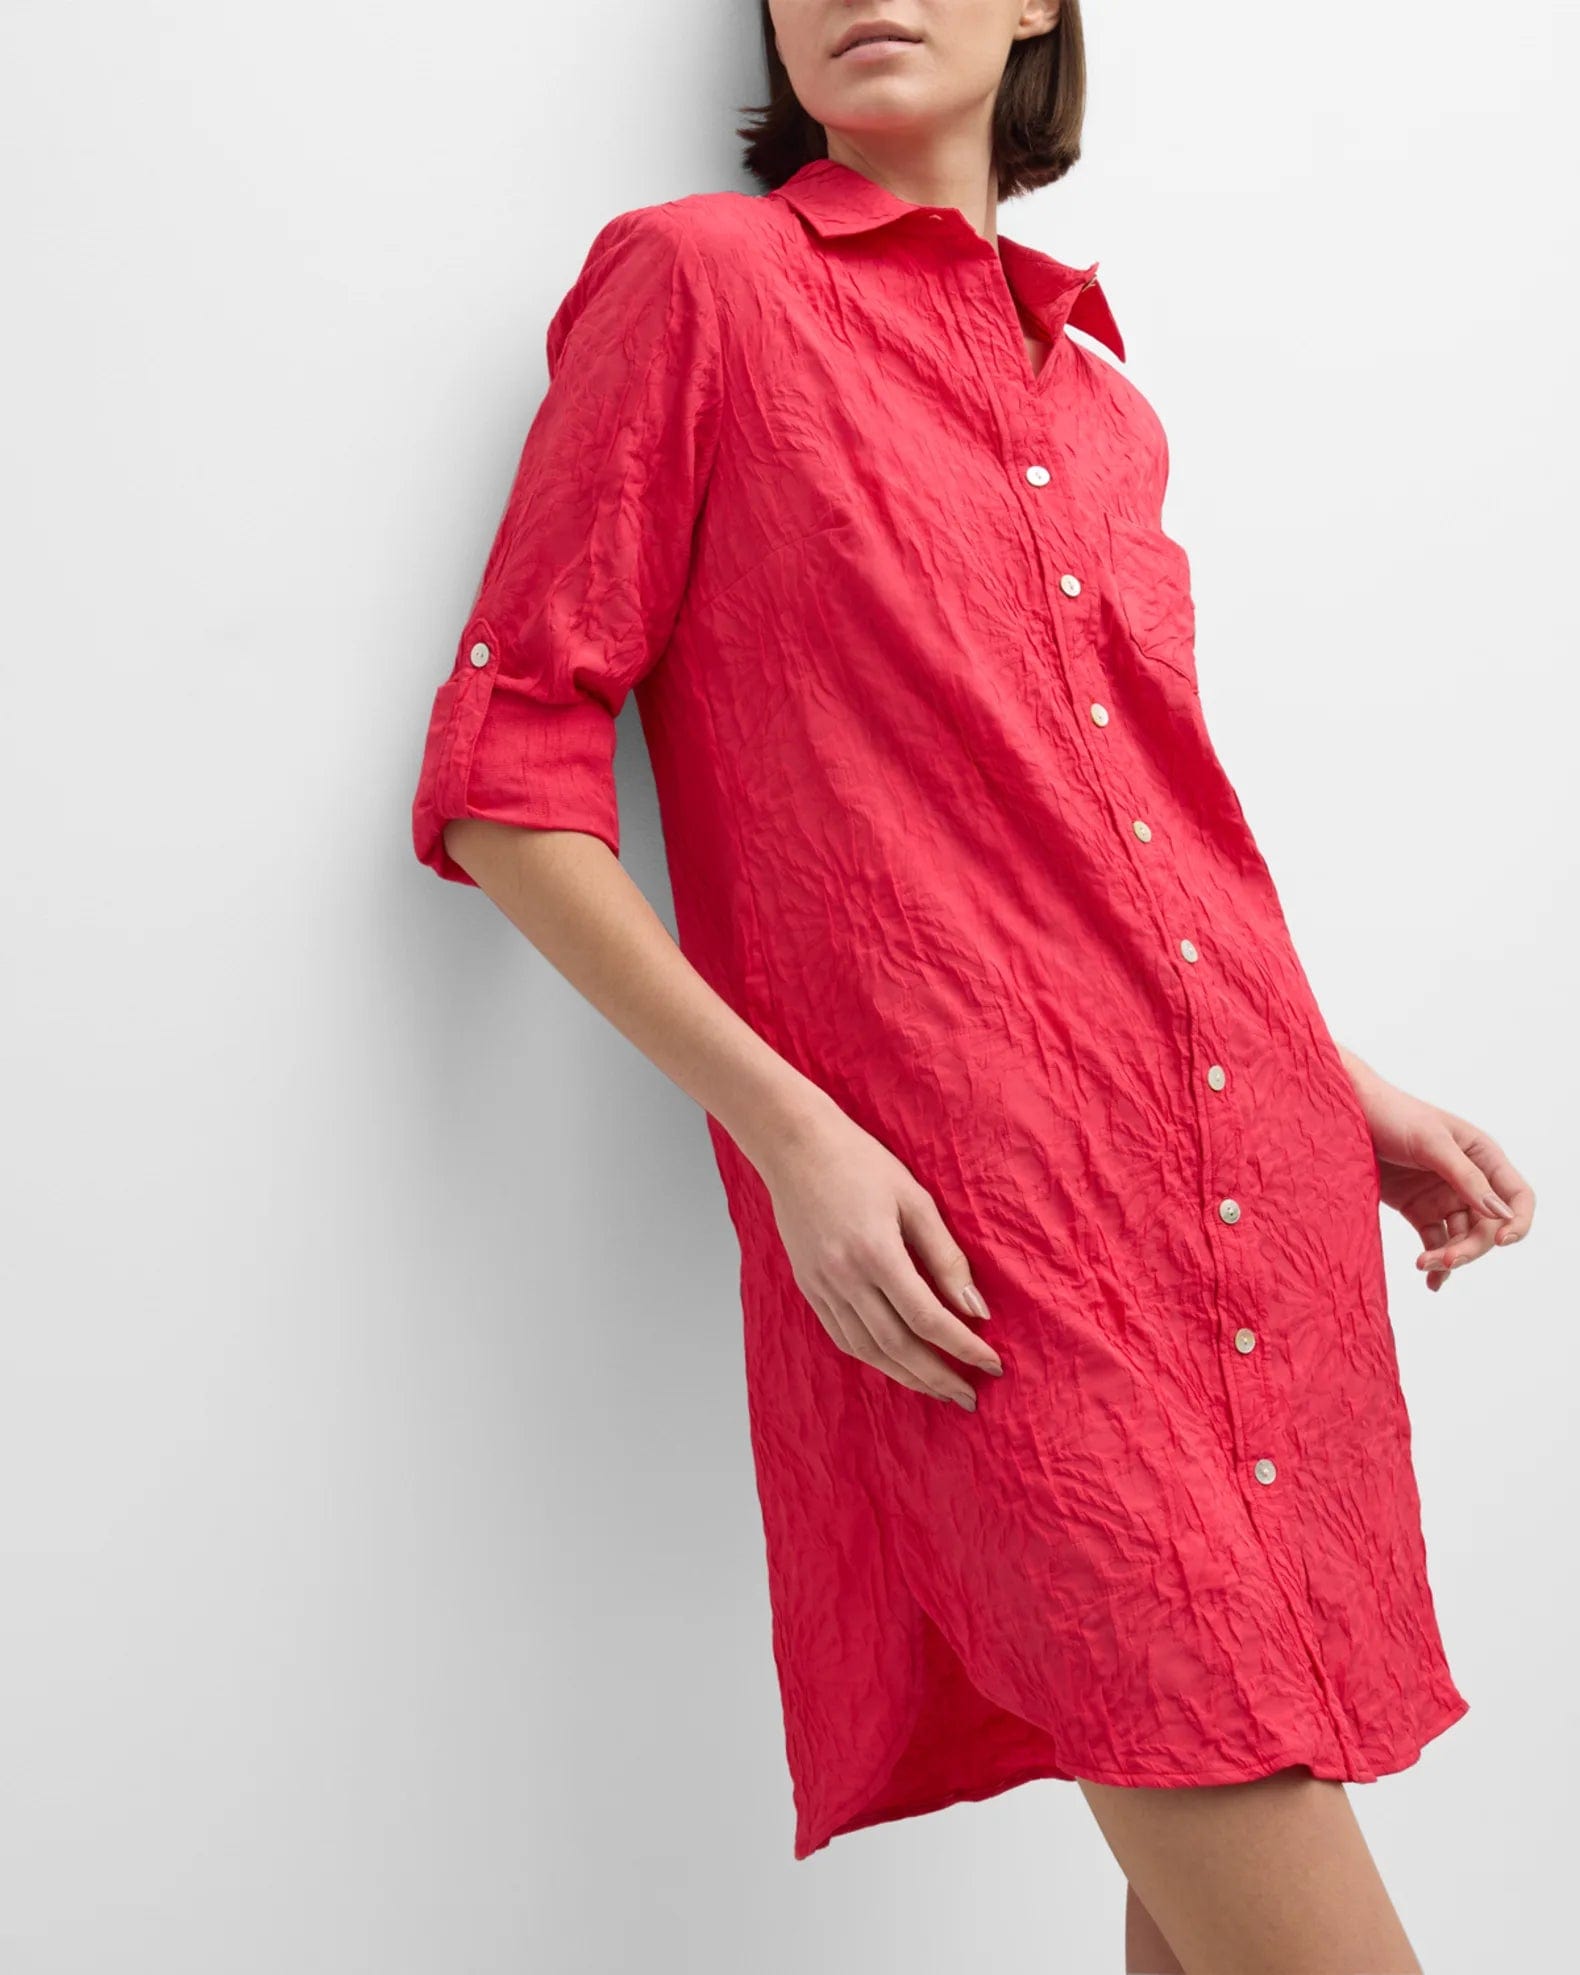 Finley Shirts Women's Shirts & Tops Finley Alex Textured Jacquard Midi Shirtdress